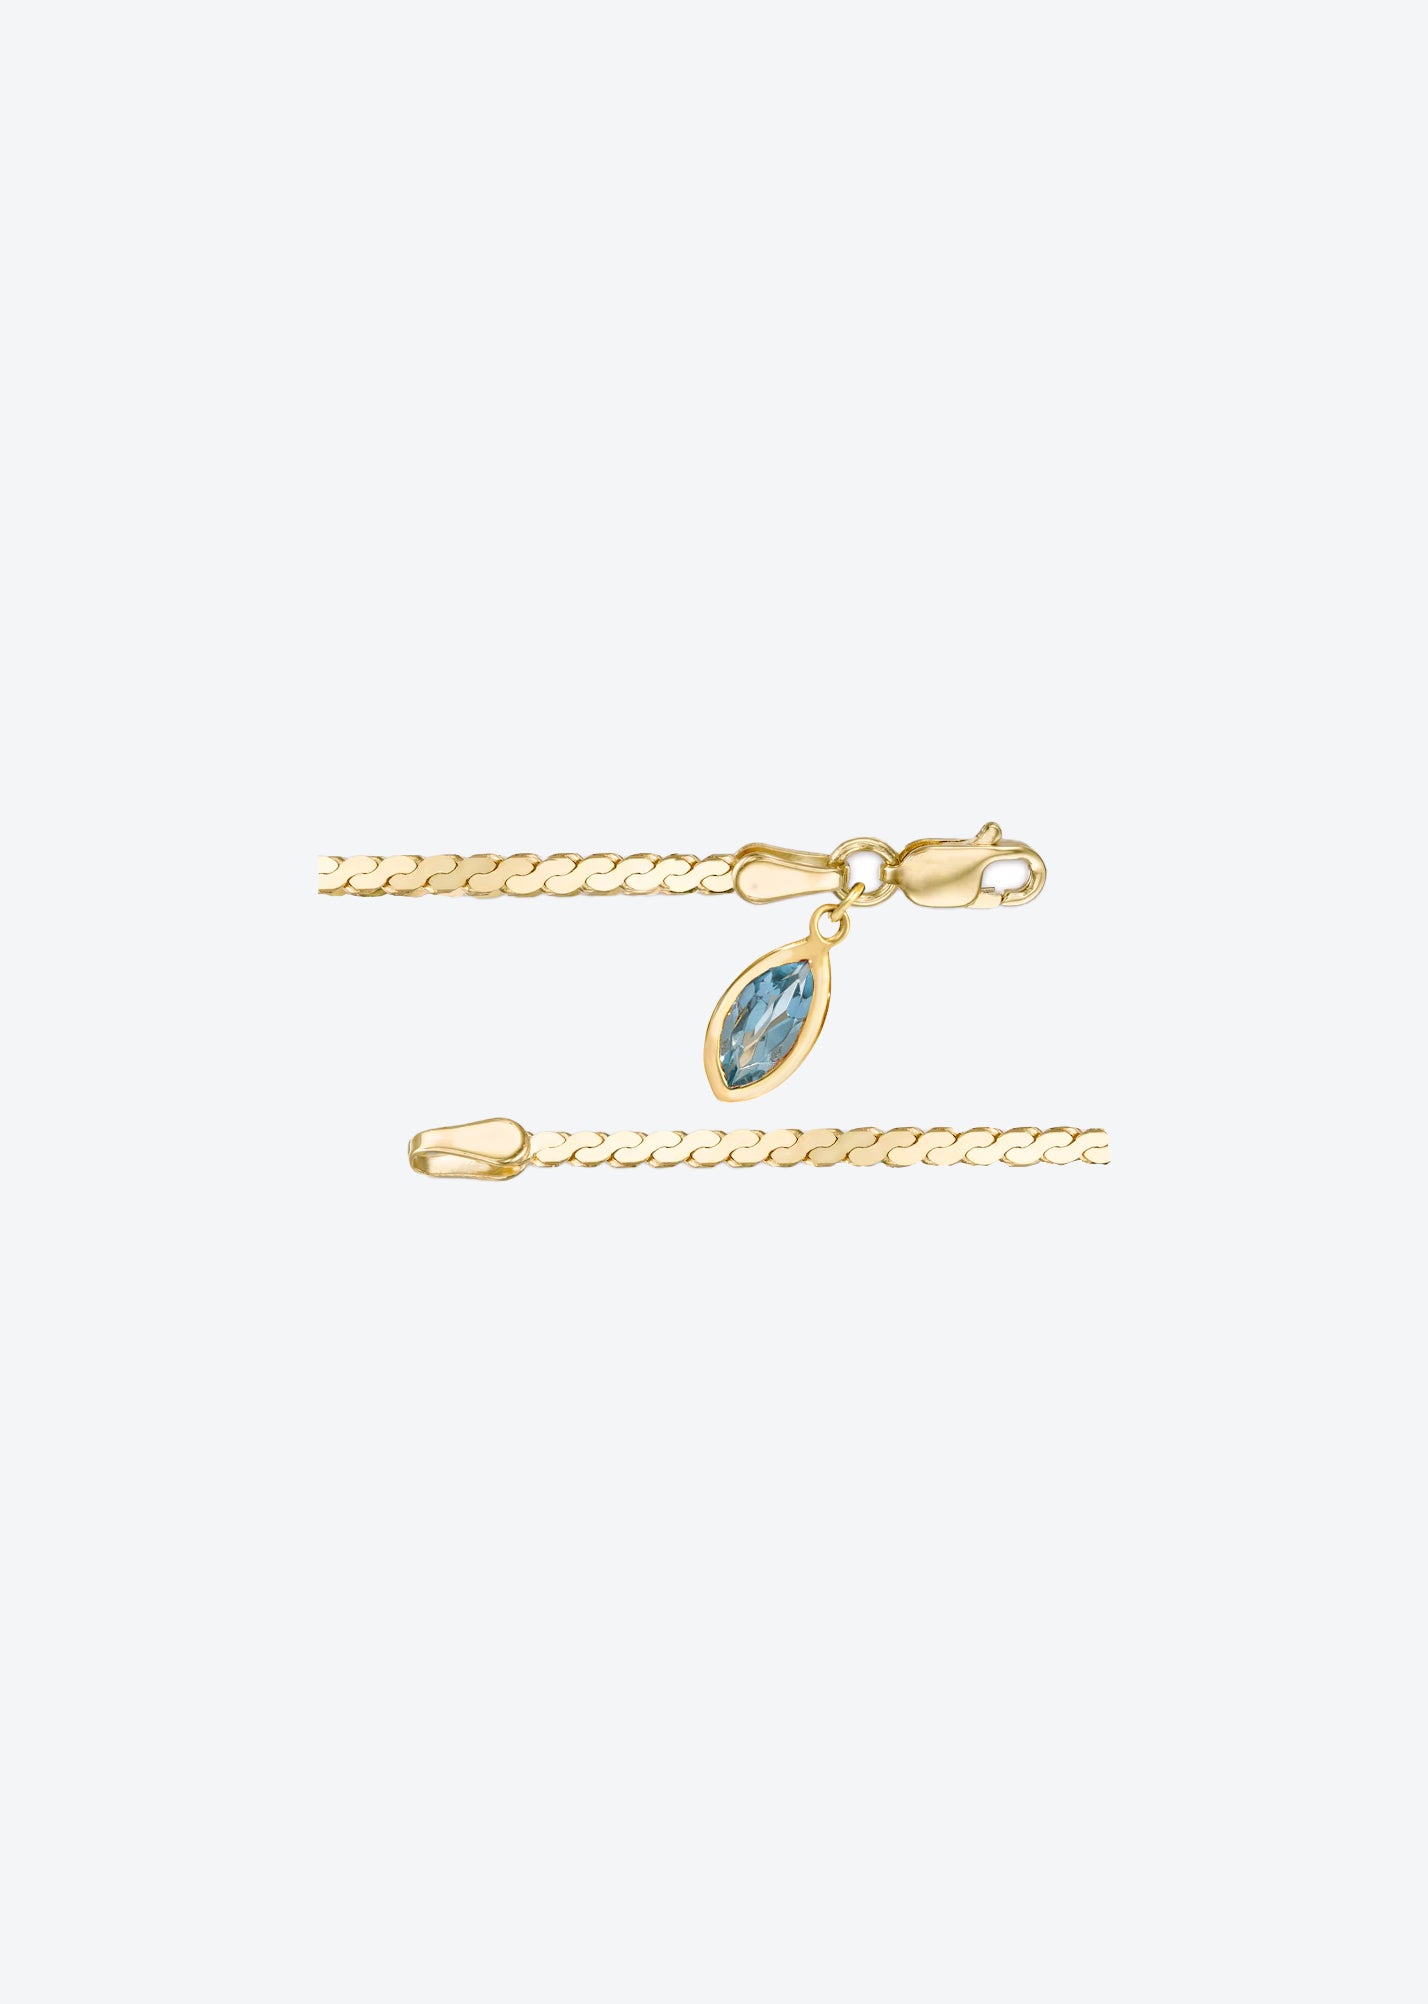 Serpentine Chain with Aquamarine Droplet